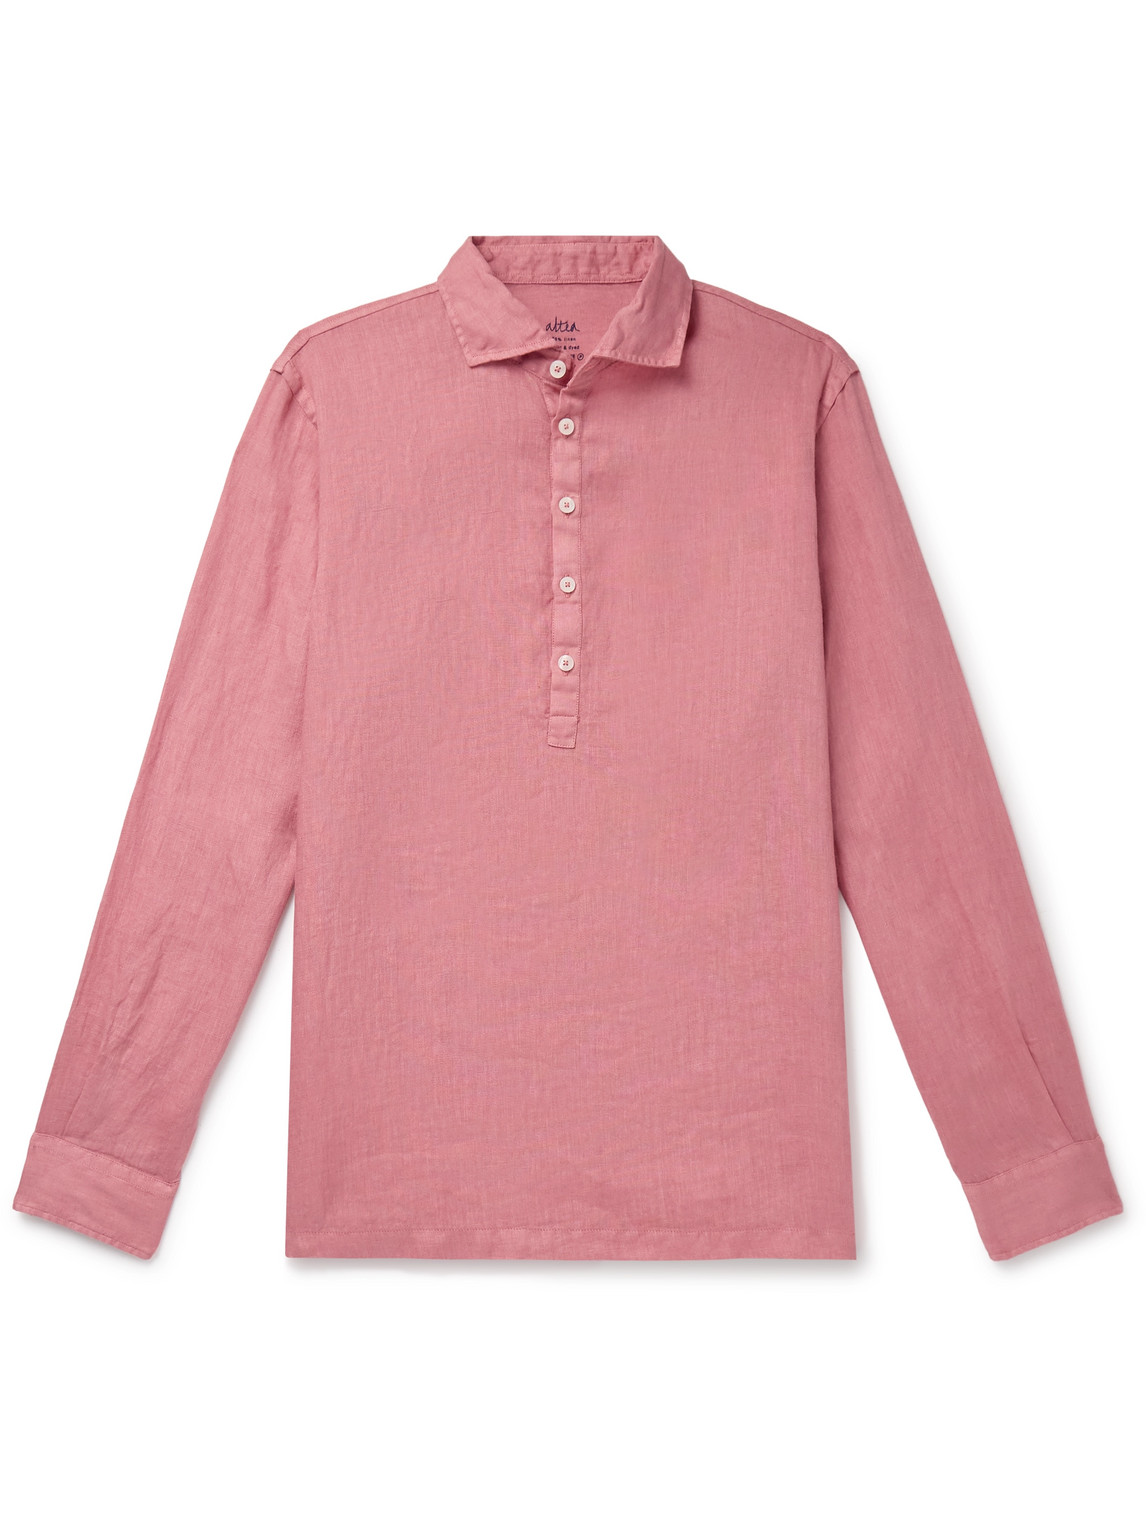 Altea - Tyler Garment-Dyed Linen Half-Placket Shirt - Men - Pink - L von Altea